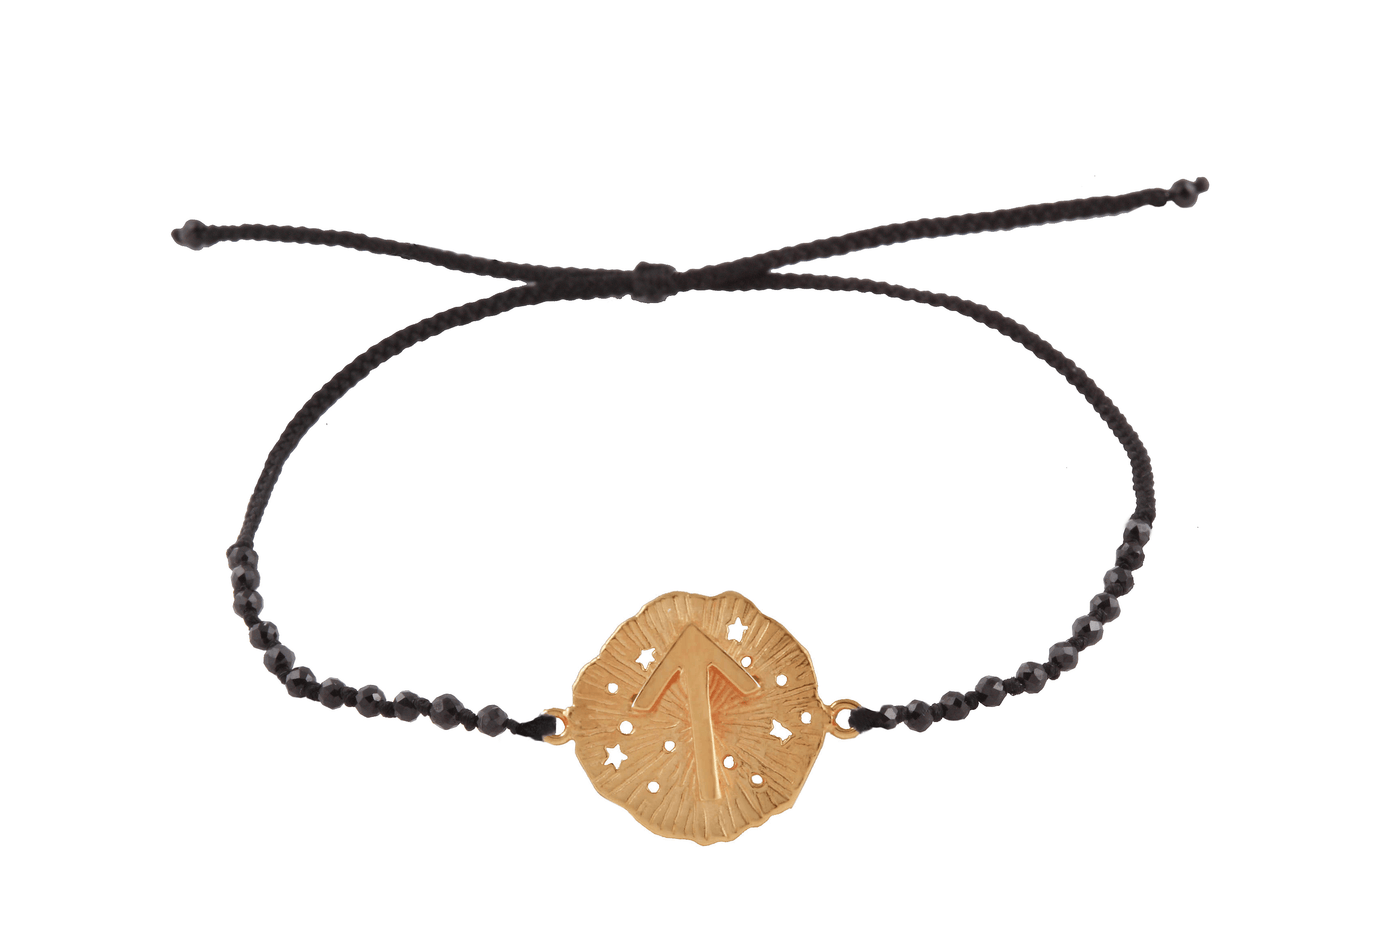 Runic medallion amulet Tiwaz bracelet with beads. Gold plated